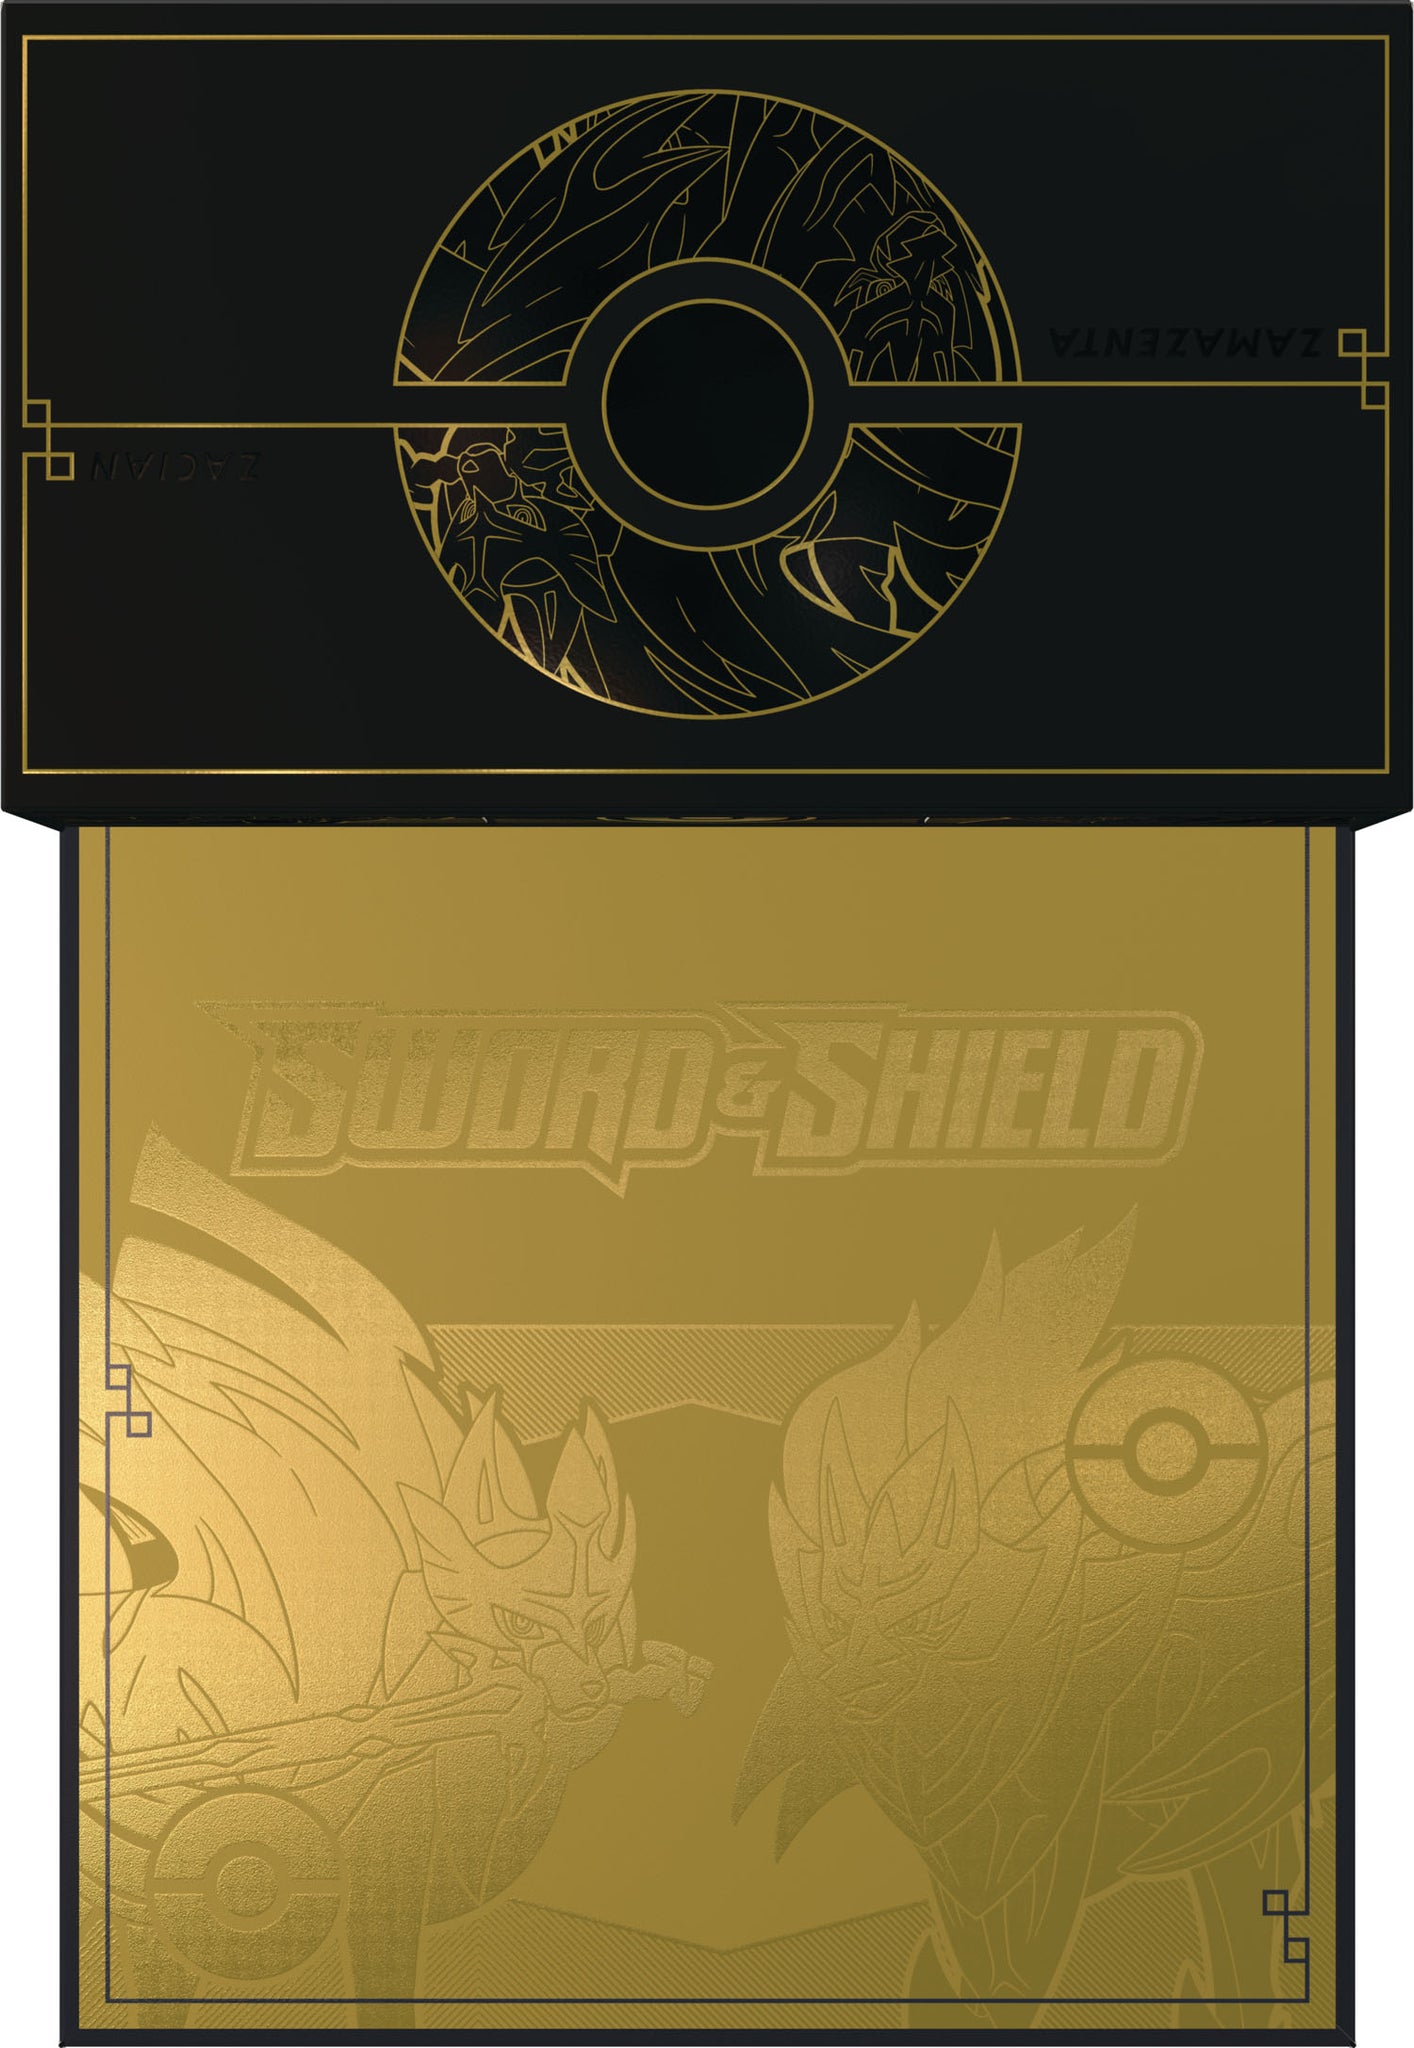 Zacian and Zamazenta are Pokémon Sword and Shield's featured